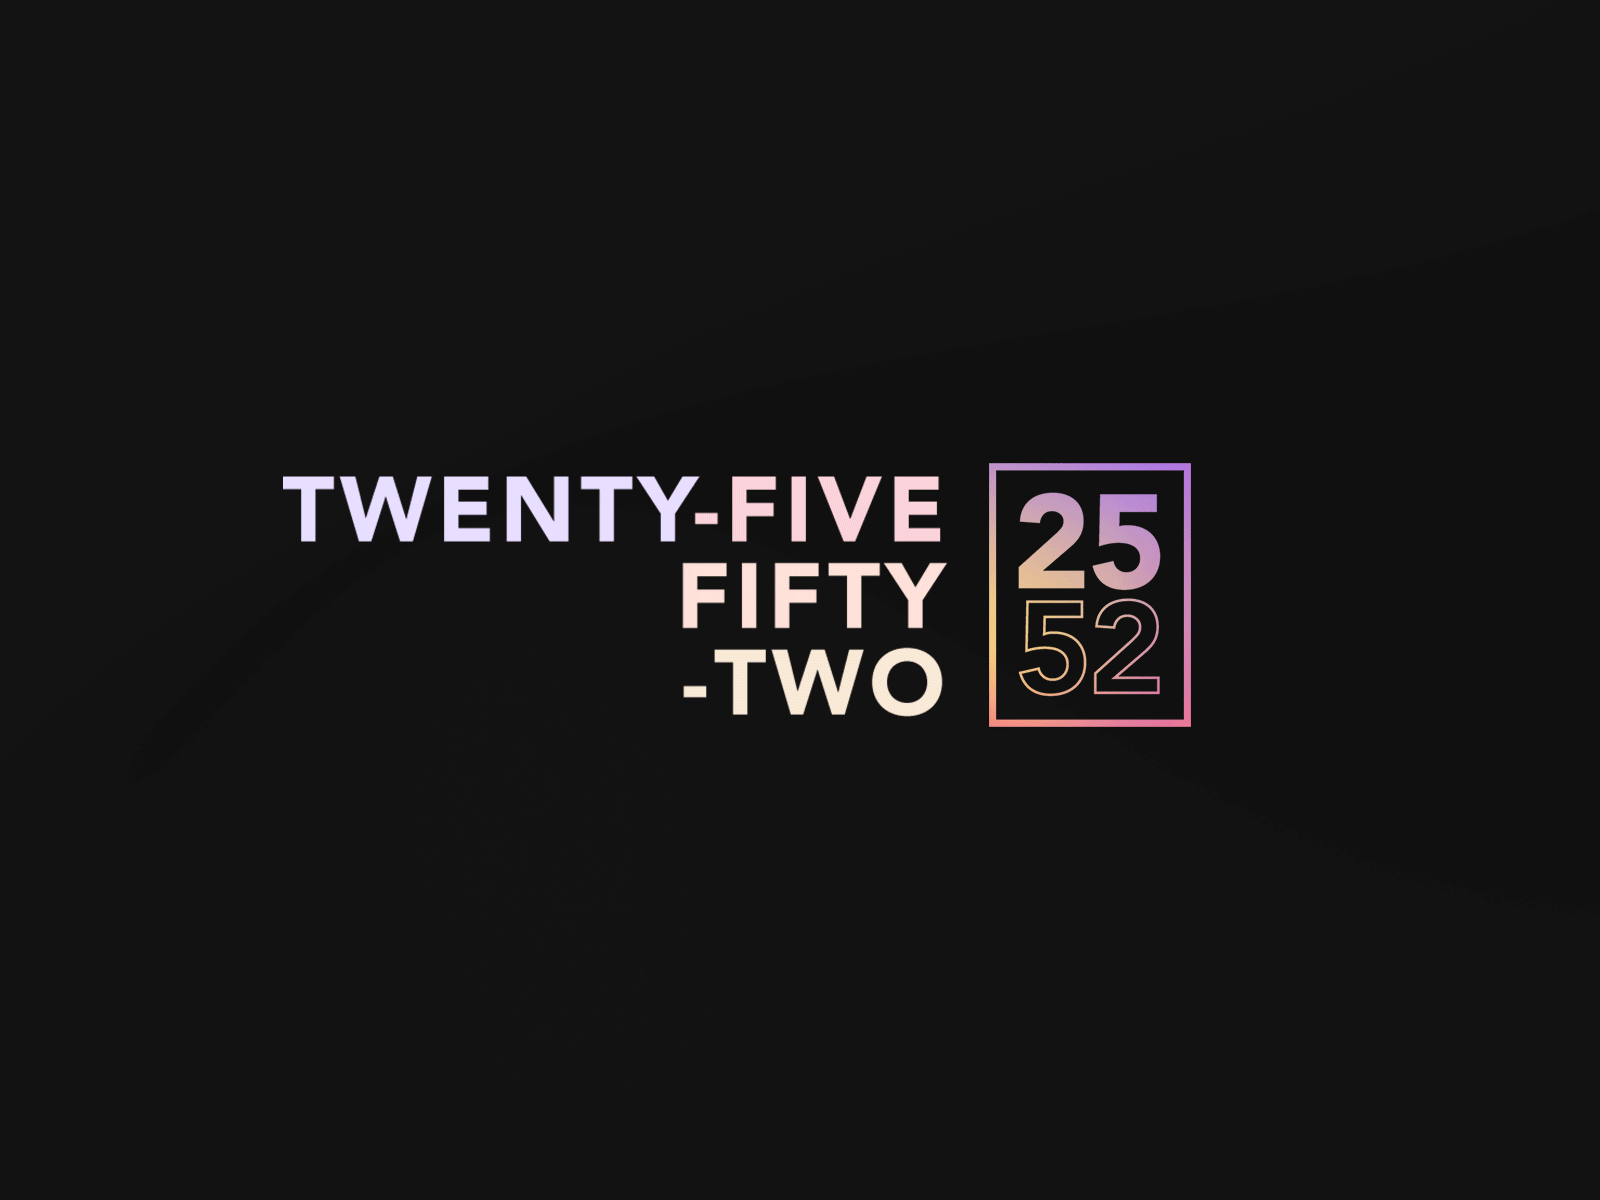 2525-twenty-five-fifty-two-logo-animation-by-nick-lowry-on-dribbble